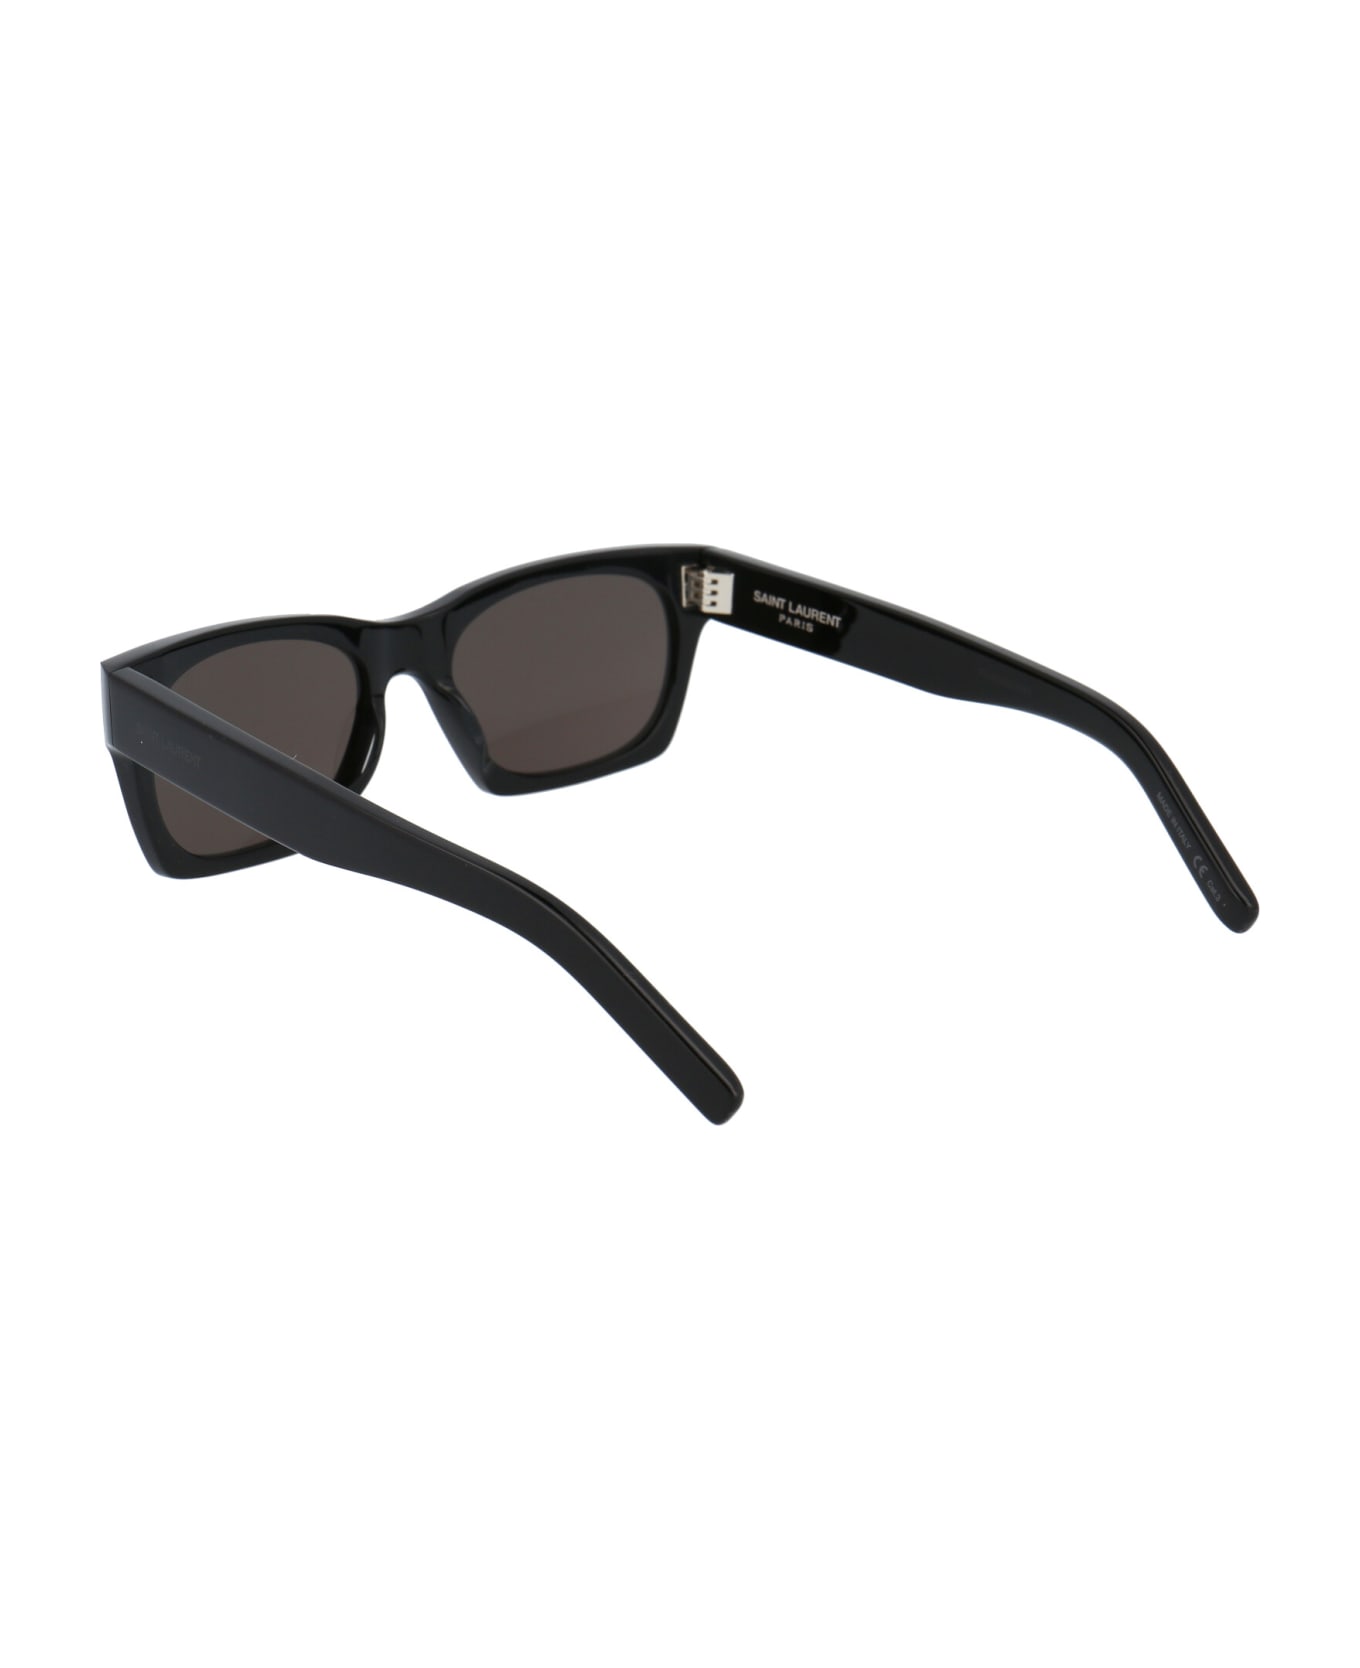 Saint Laurent Eyewear Sl 402 Sunglasses - 001 Prada Eyewear Decode sunglasses